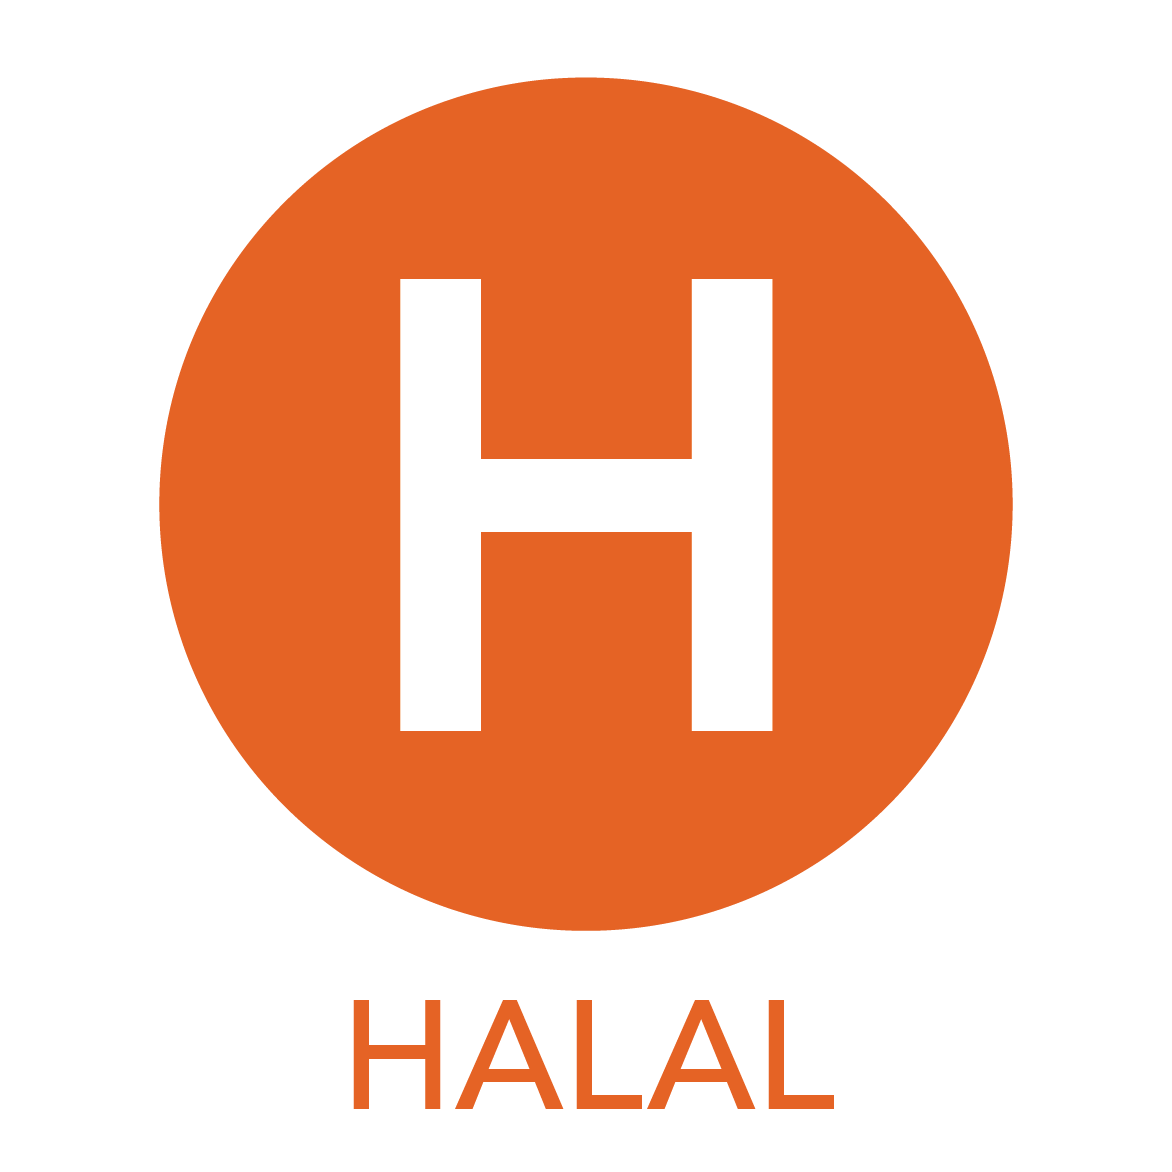 Halal food options icon